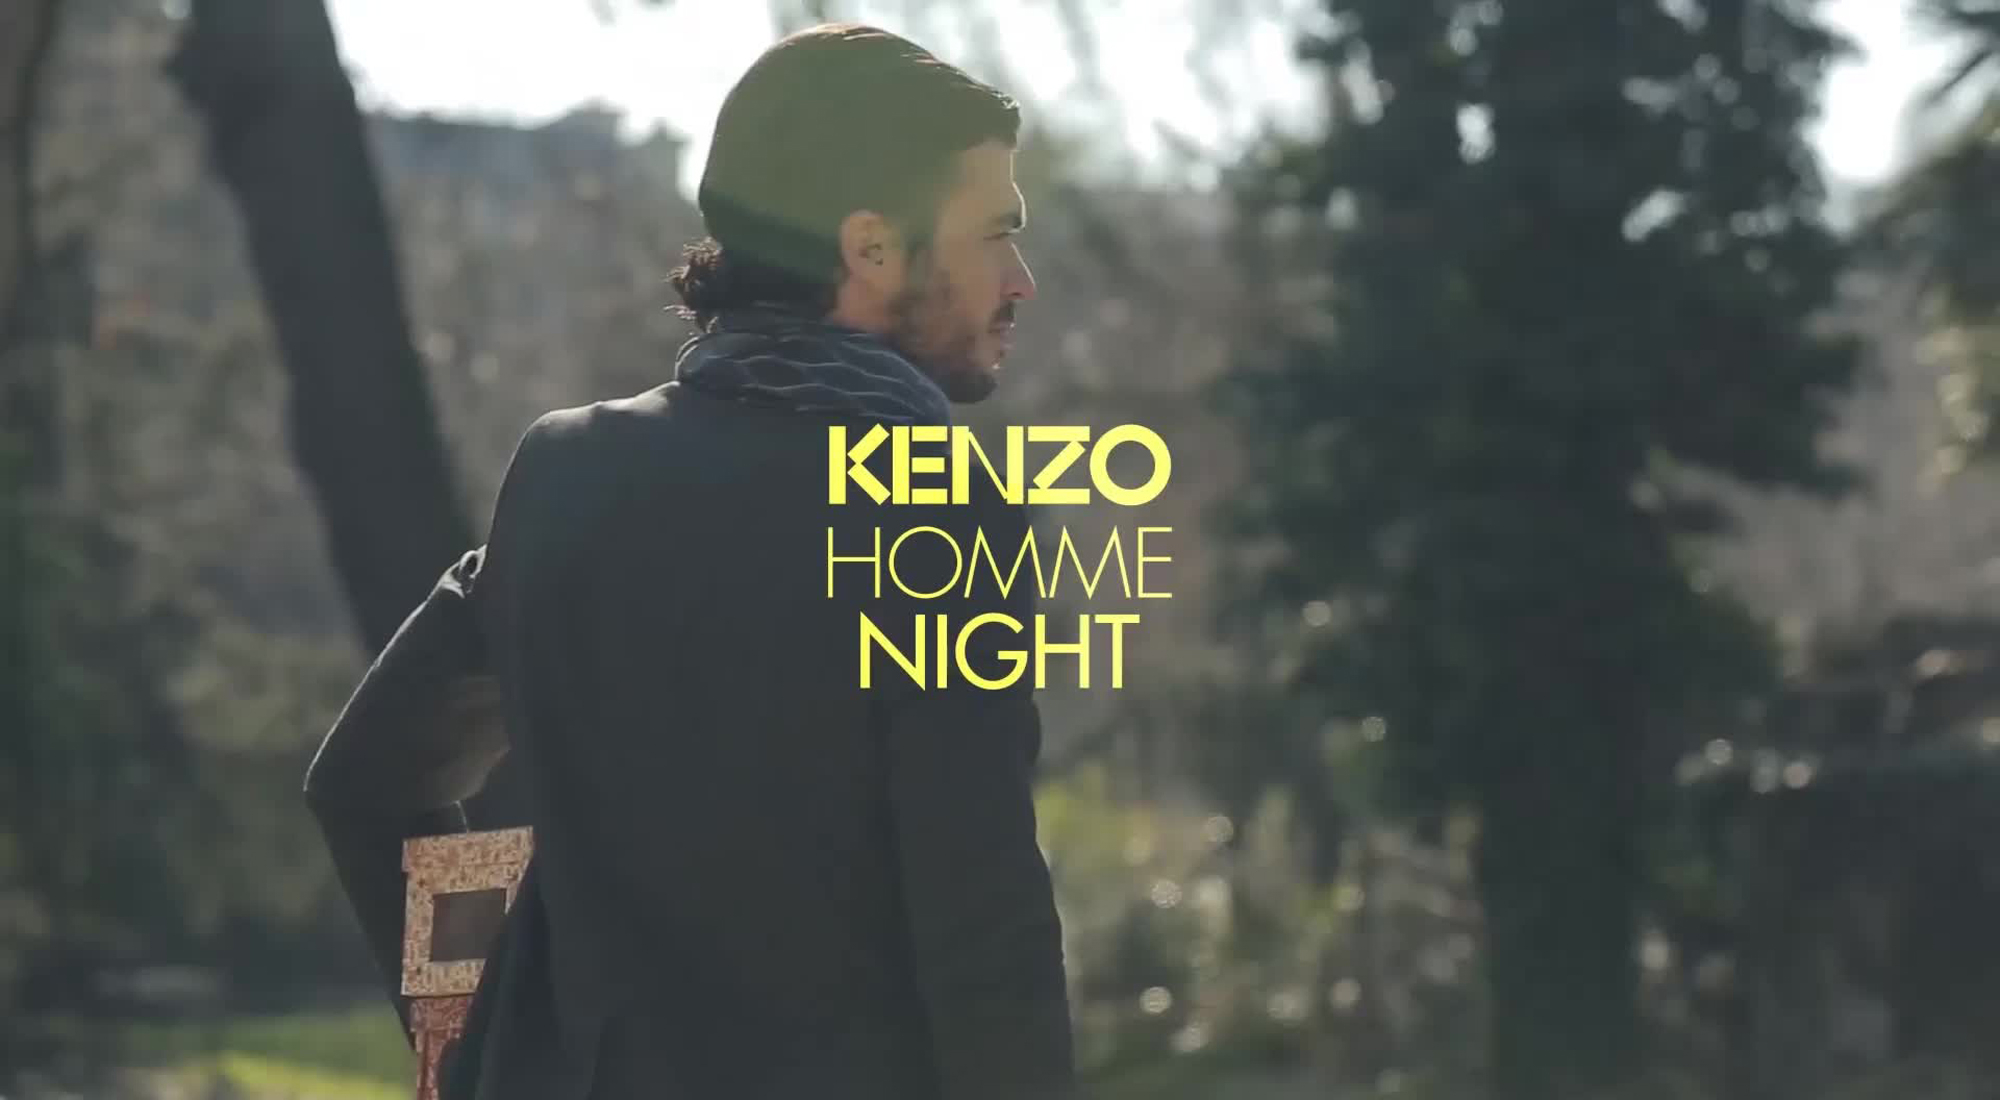 Kenzo homme Night. Kenzo Night. Кензо Найт. I Love Saturday Night Kenzo. Homme night